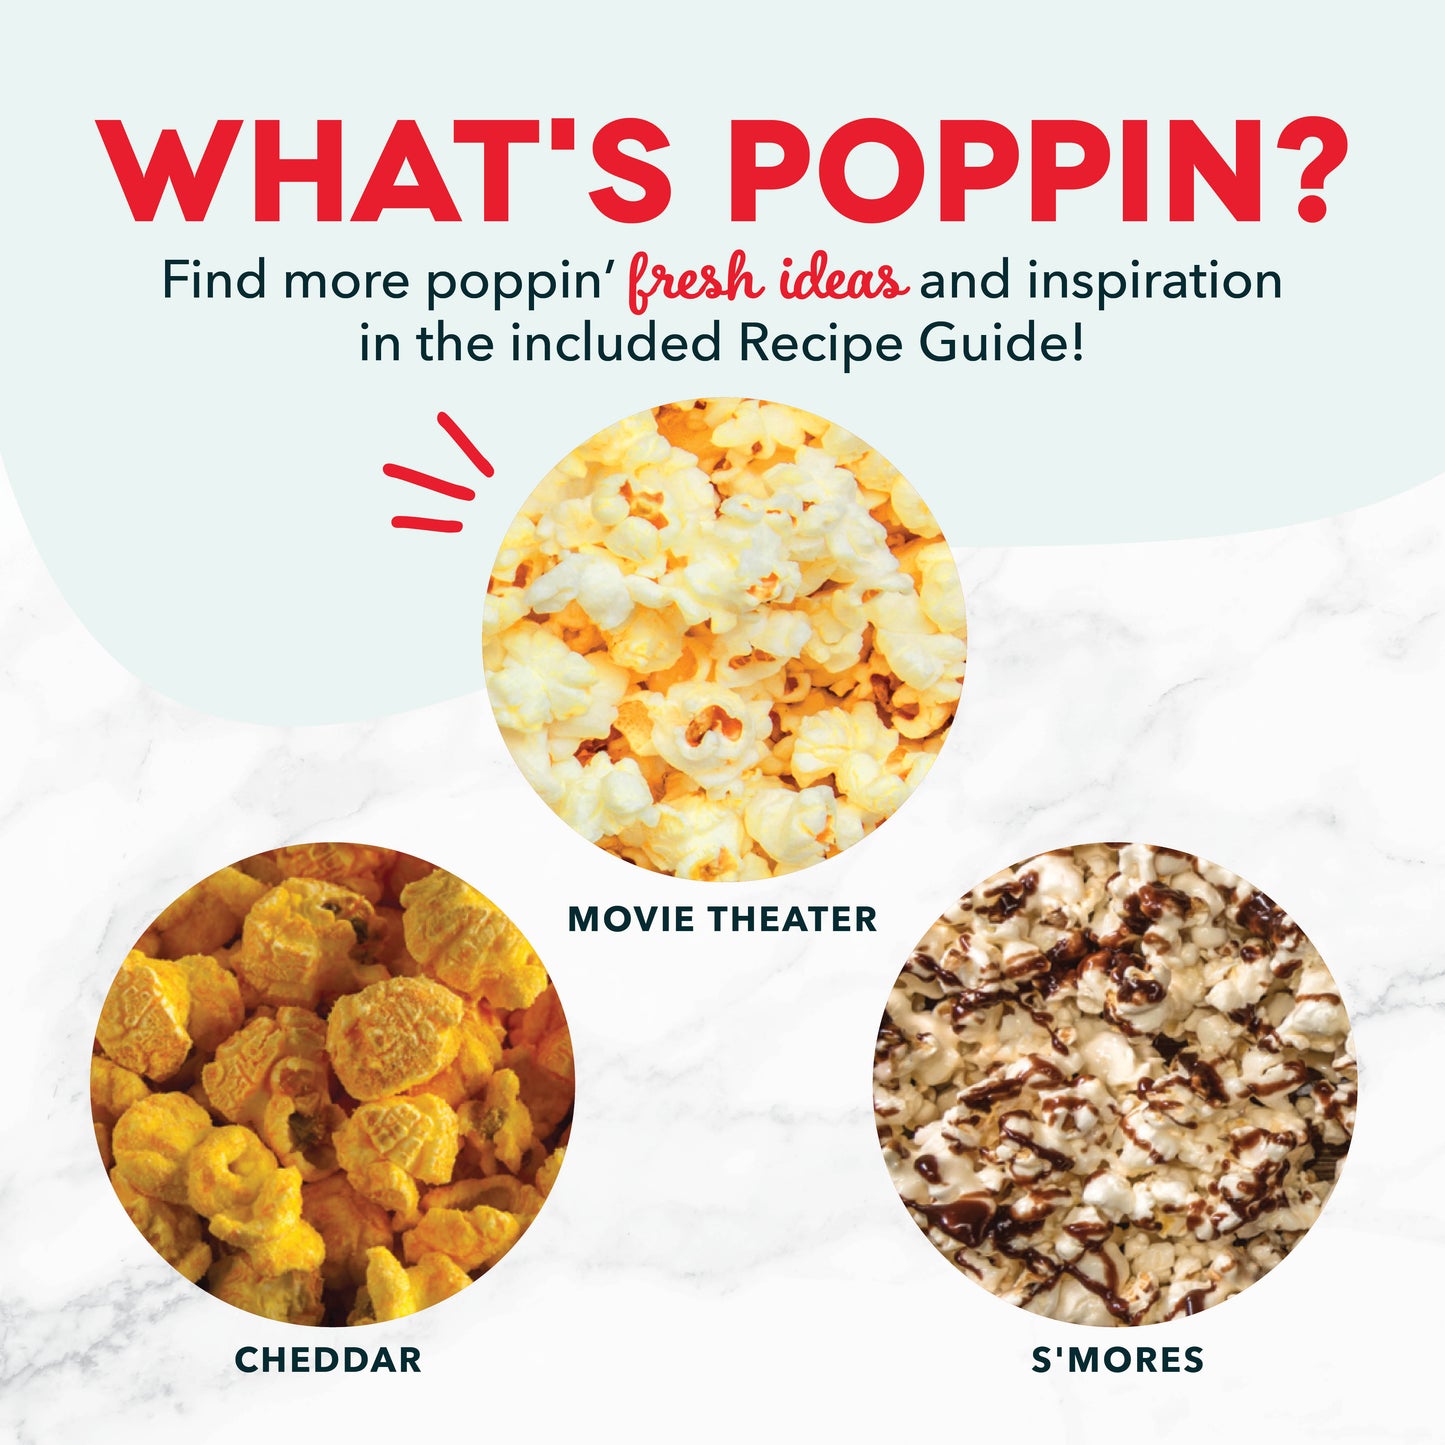 Hot Air Popcorn Maker Popcorn Makers Dash   